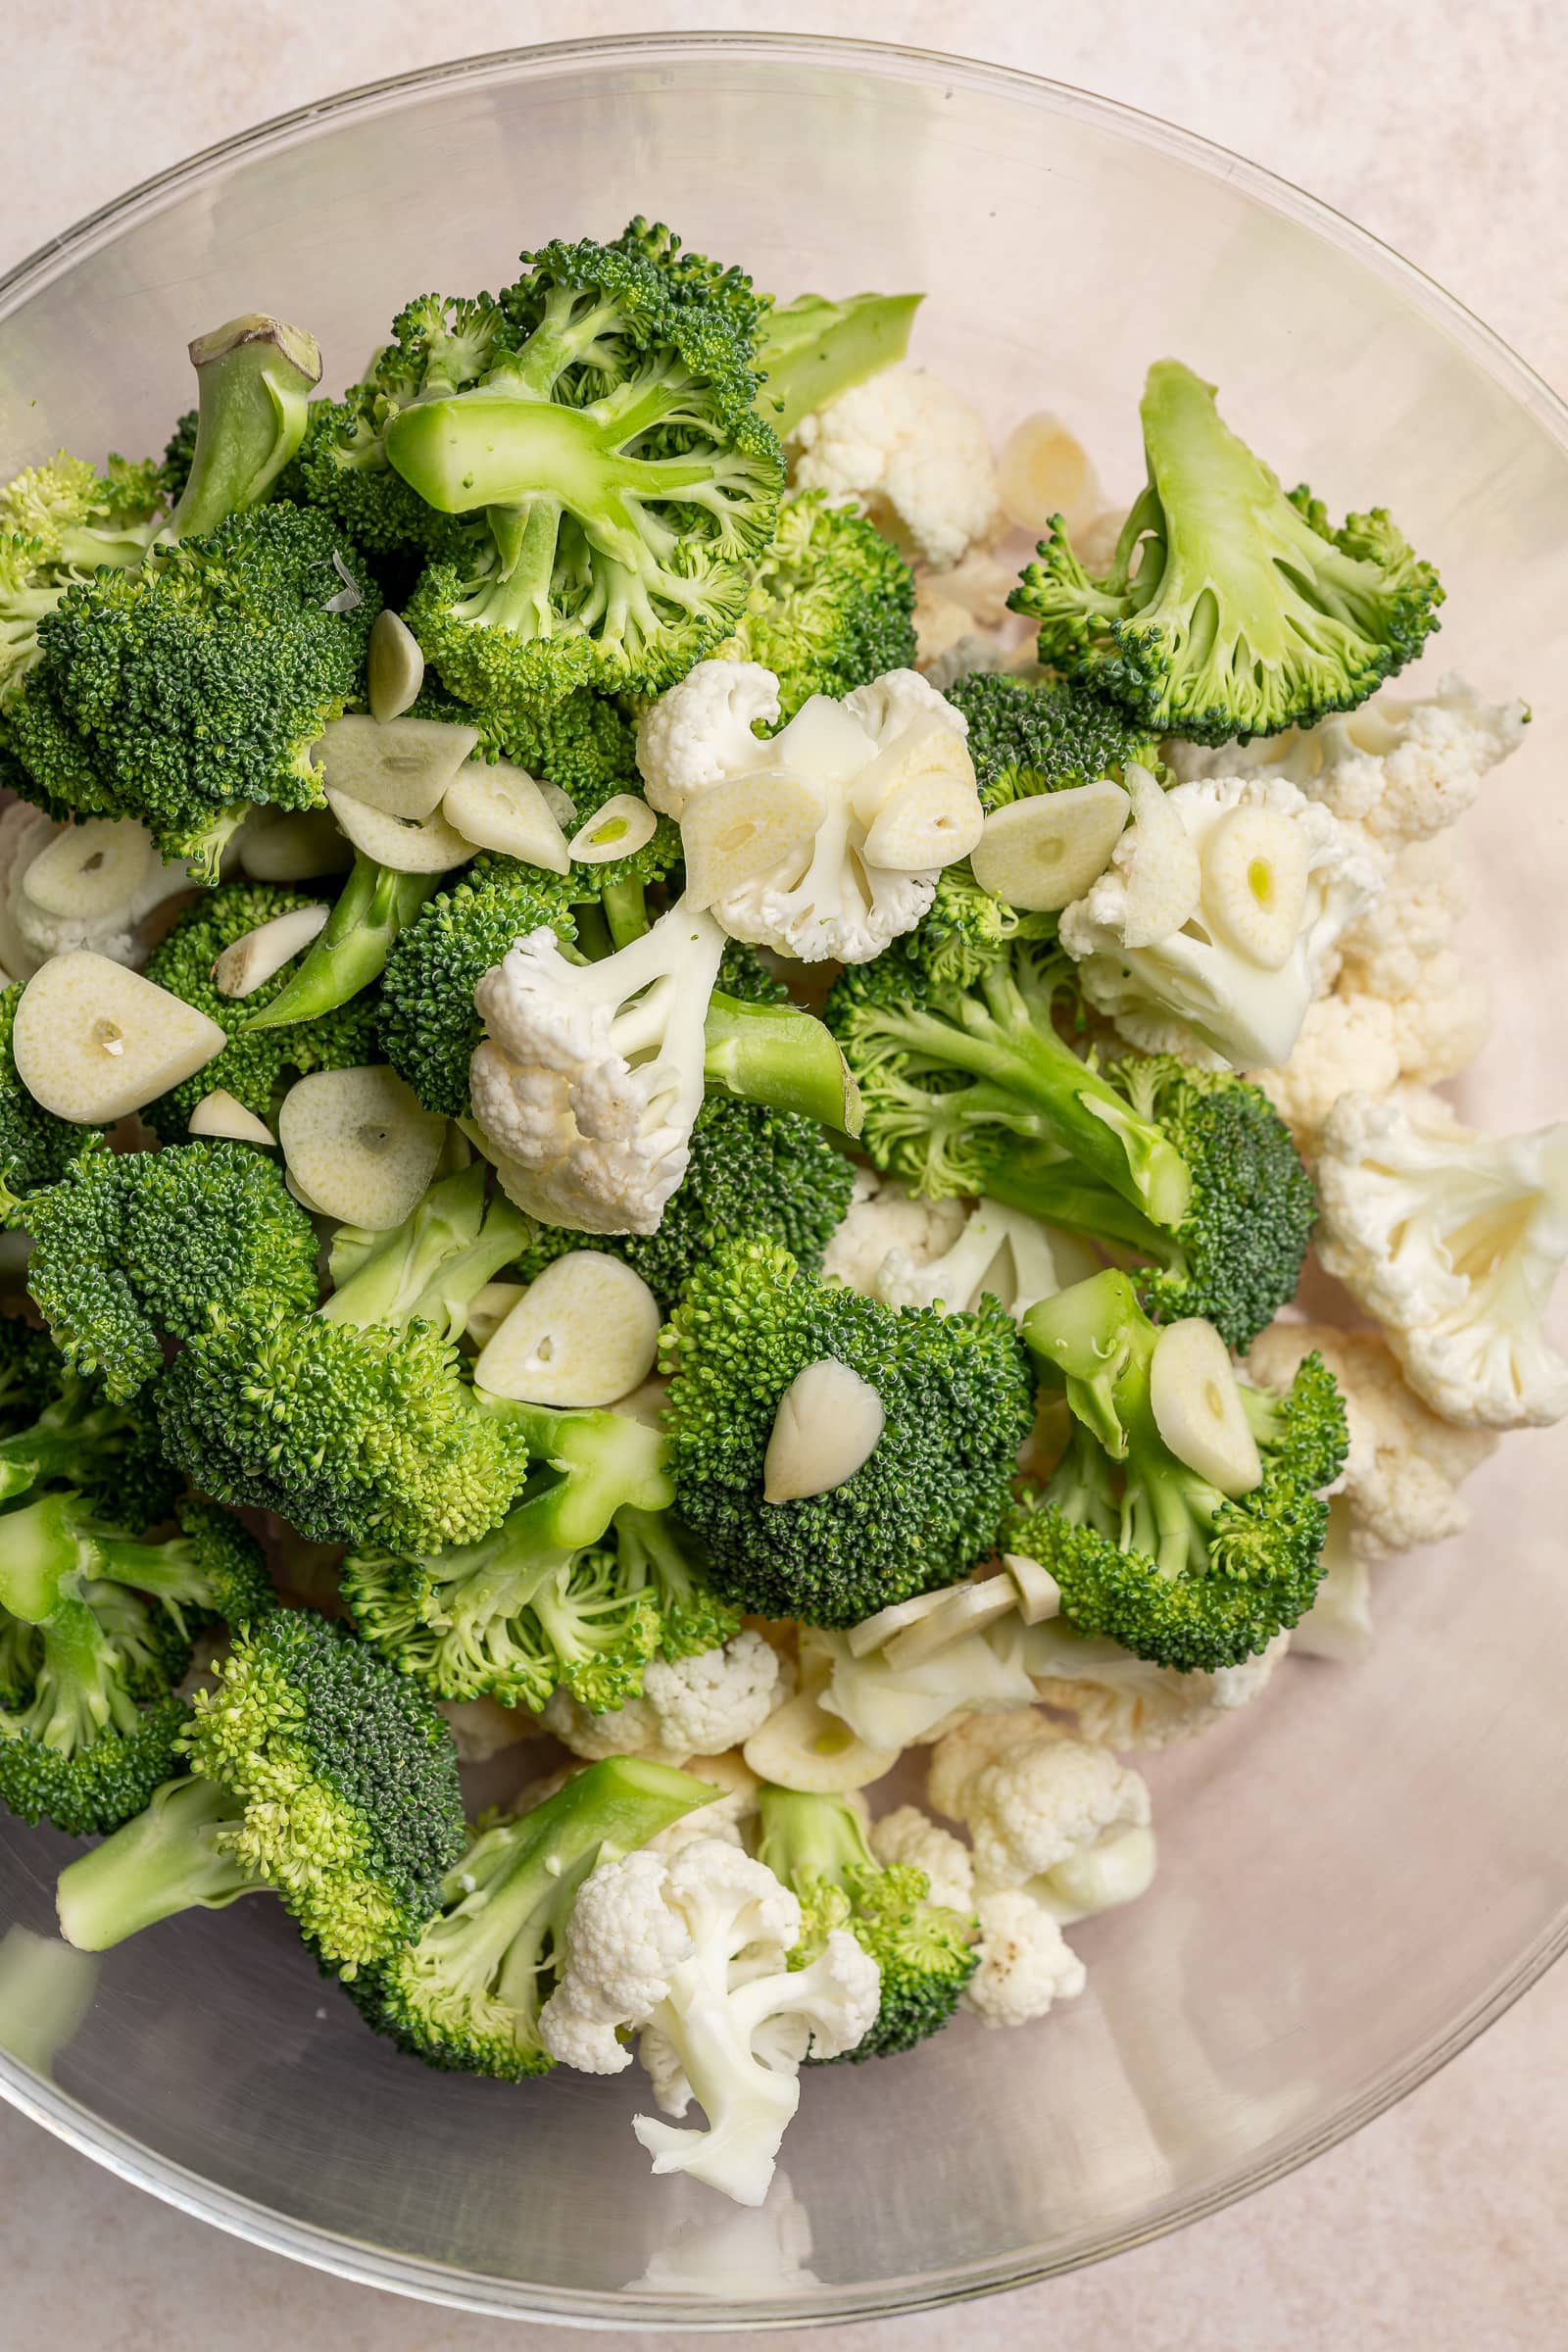 garlic, broccoli, and cauliflower in a large bowl.